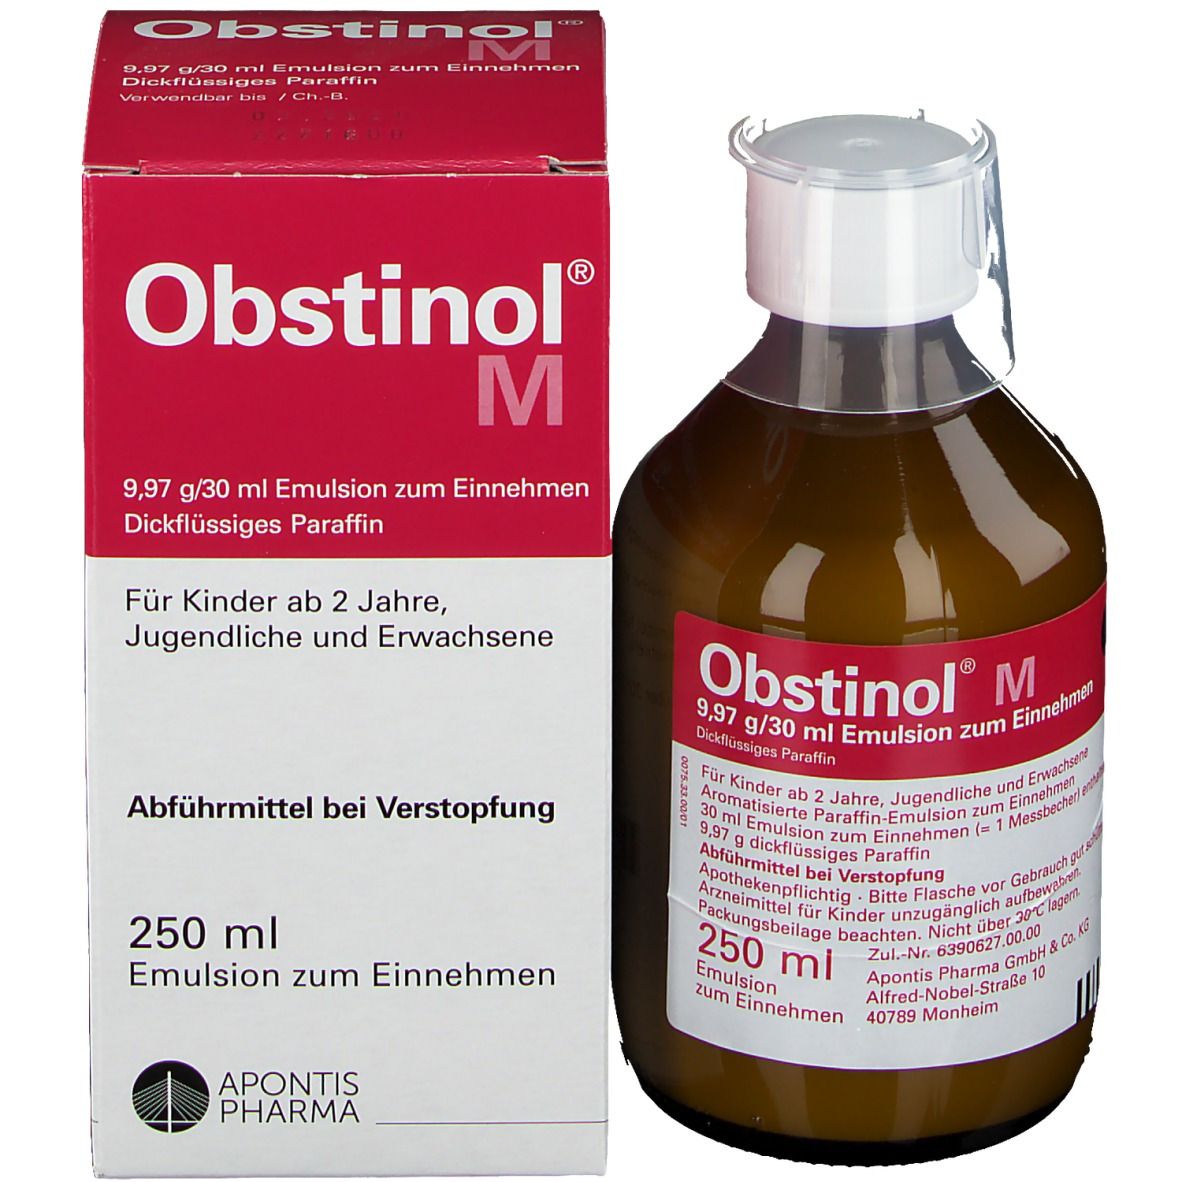 Obstinol M Emulsion